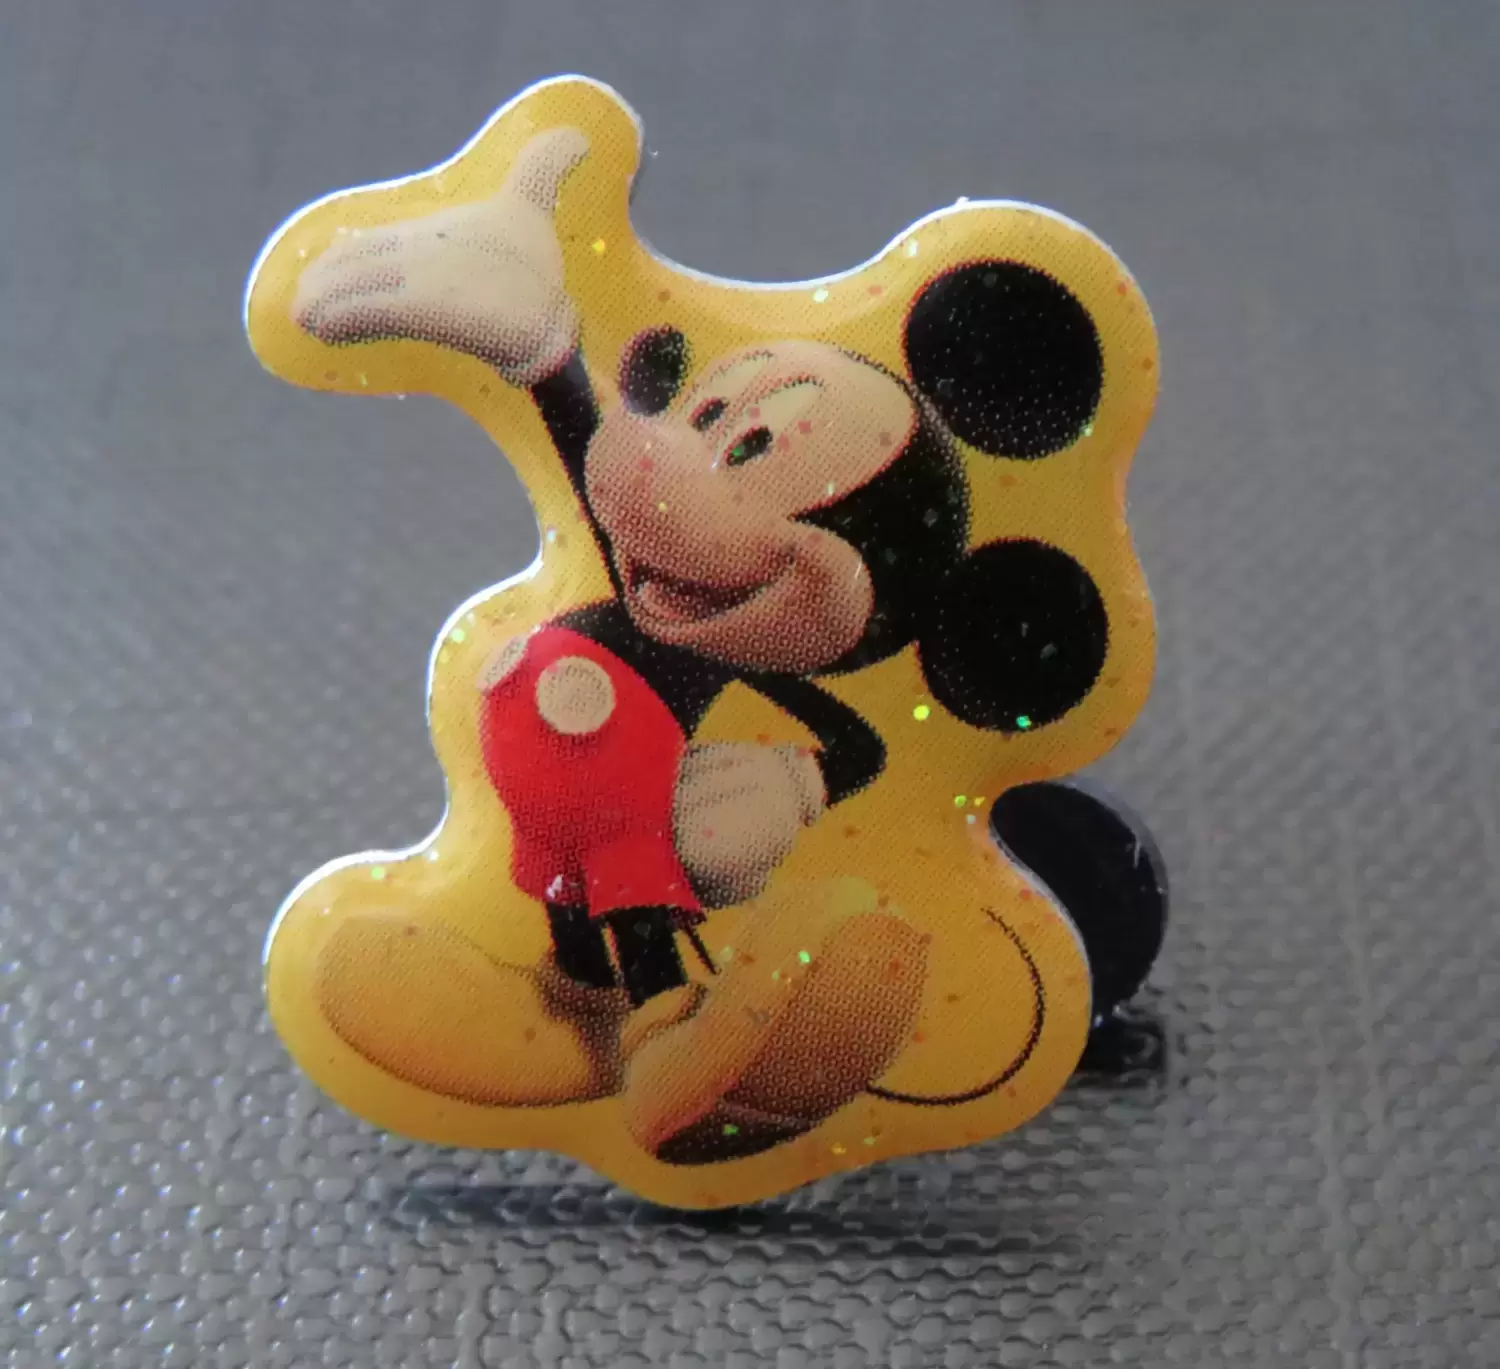 Carrefour - Disneyland Paris - New Generation Festival - Mickey Mouse